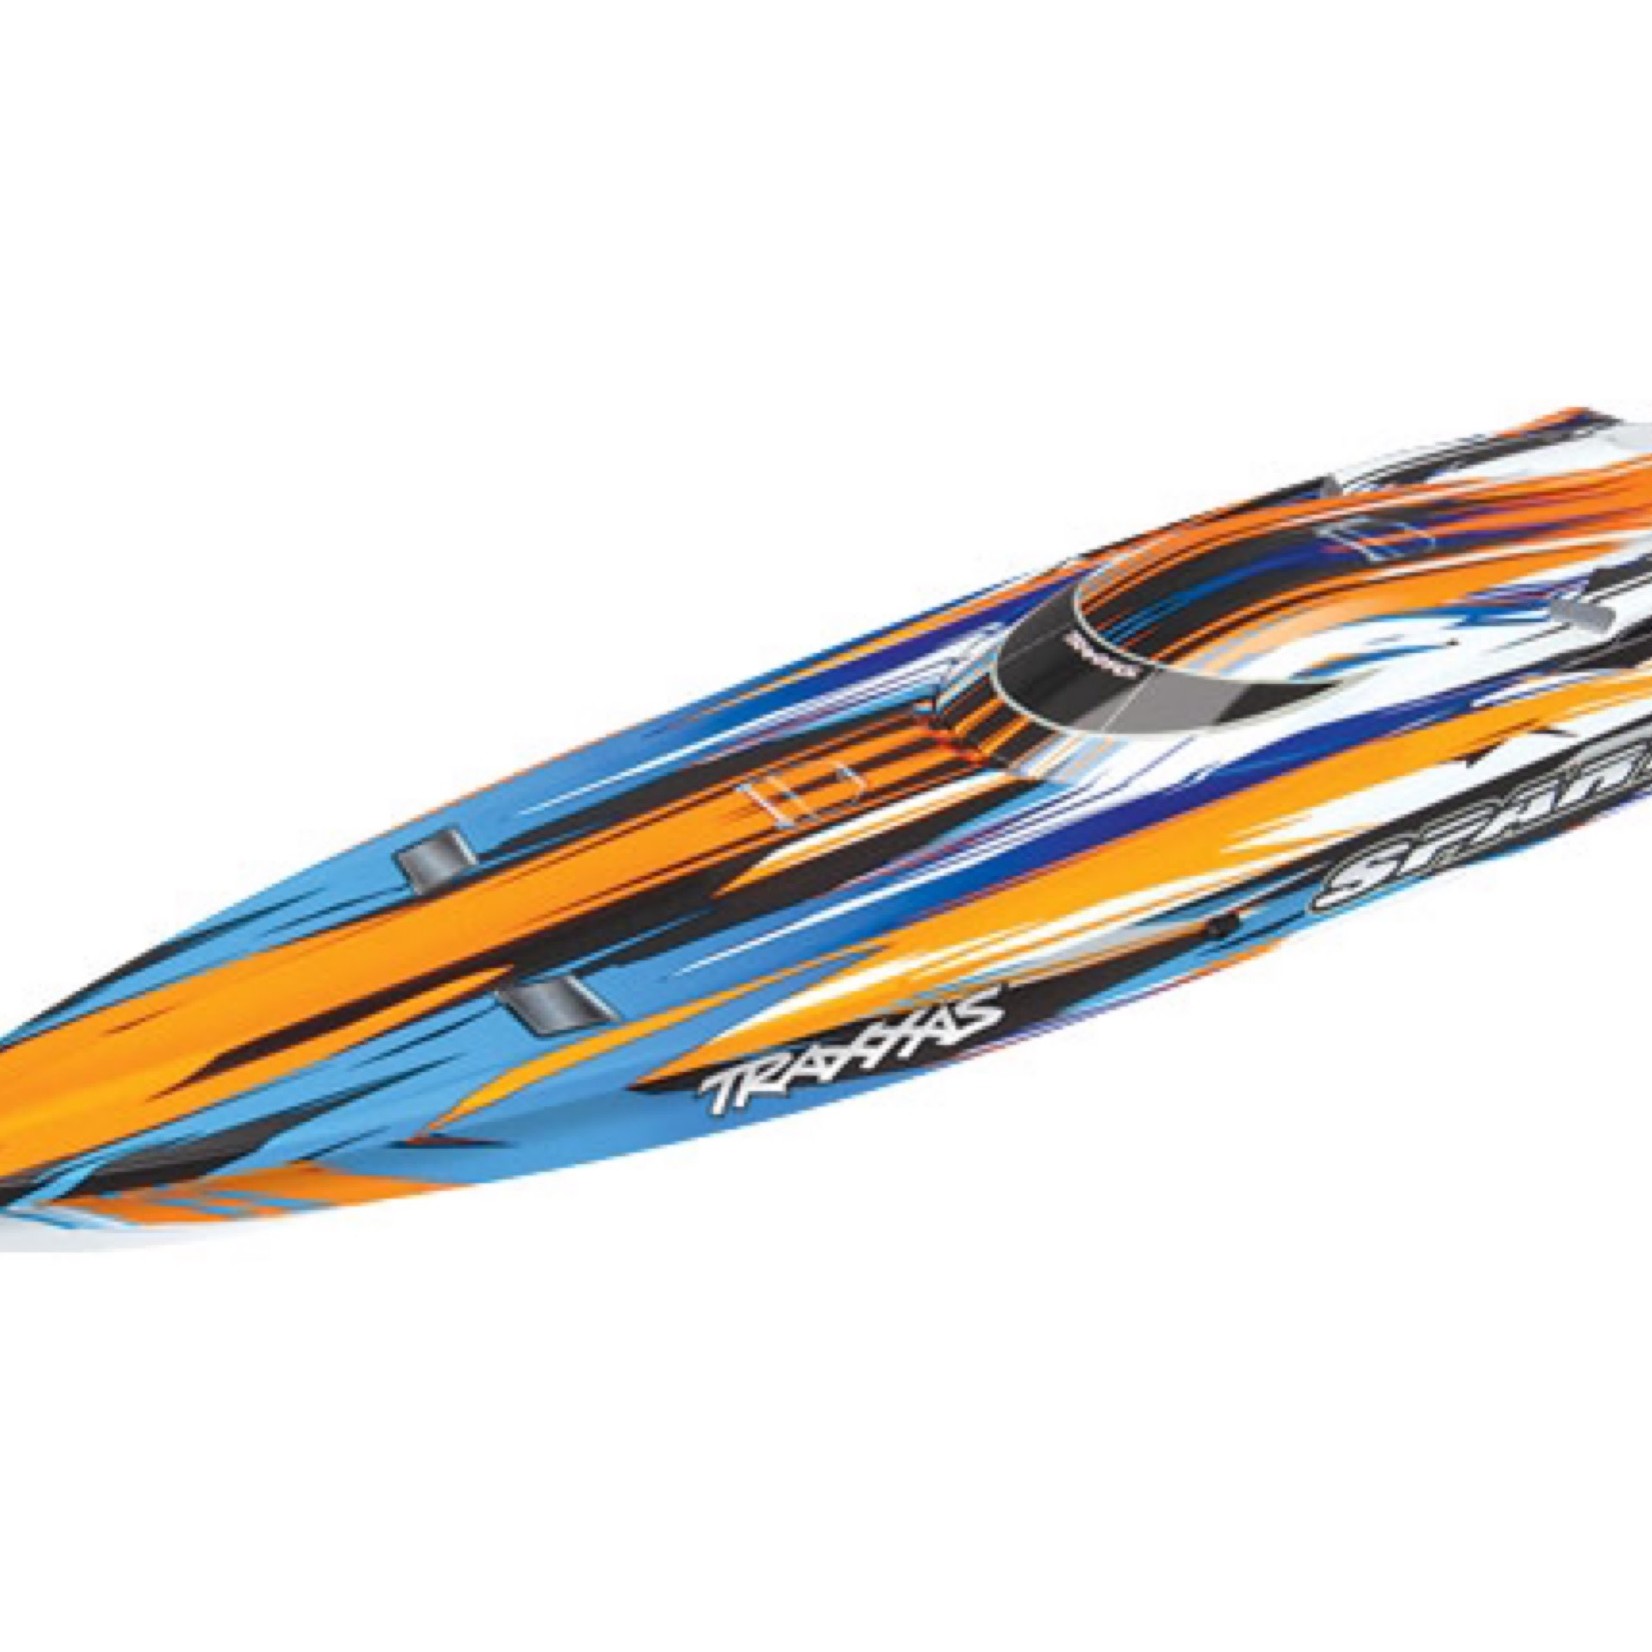 Traxxas Traxxas Spartan High Performance Race Boat RTR (Orange) #57076-4-ORNG